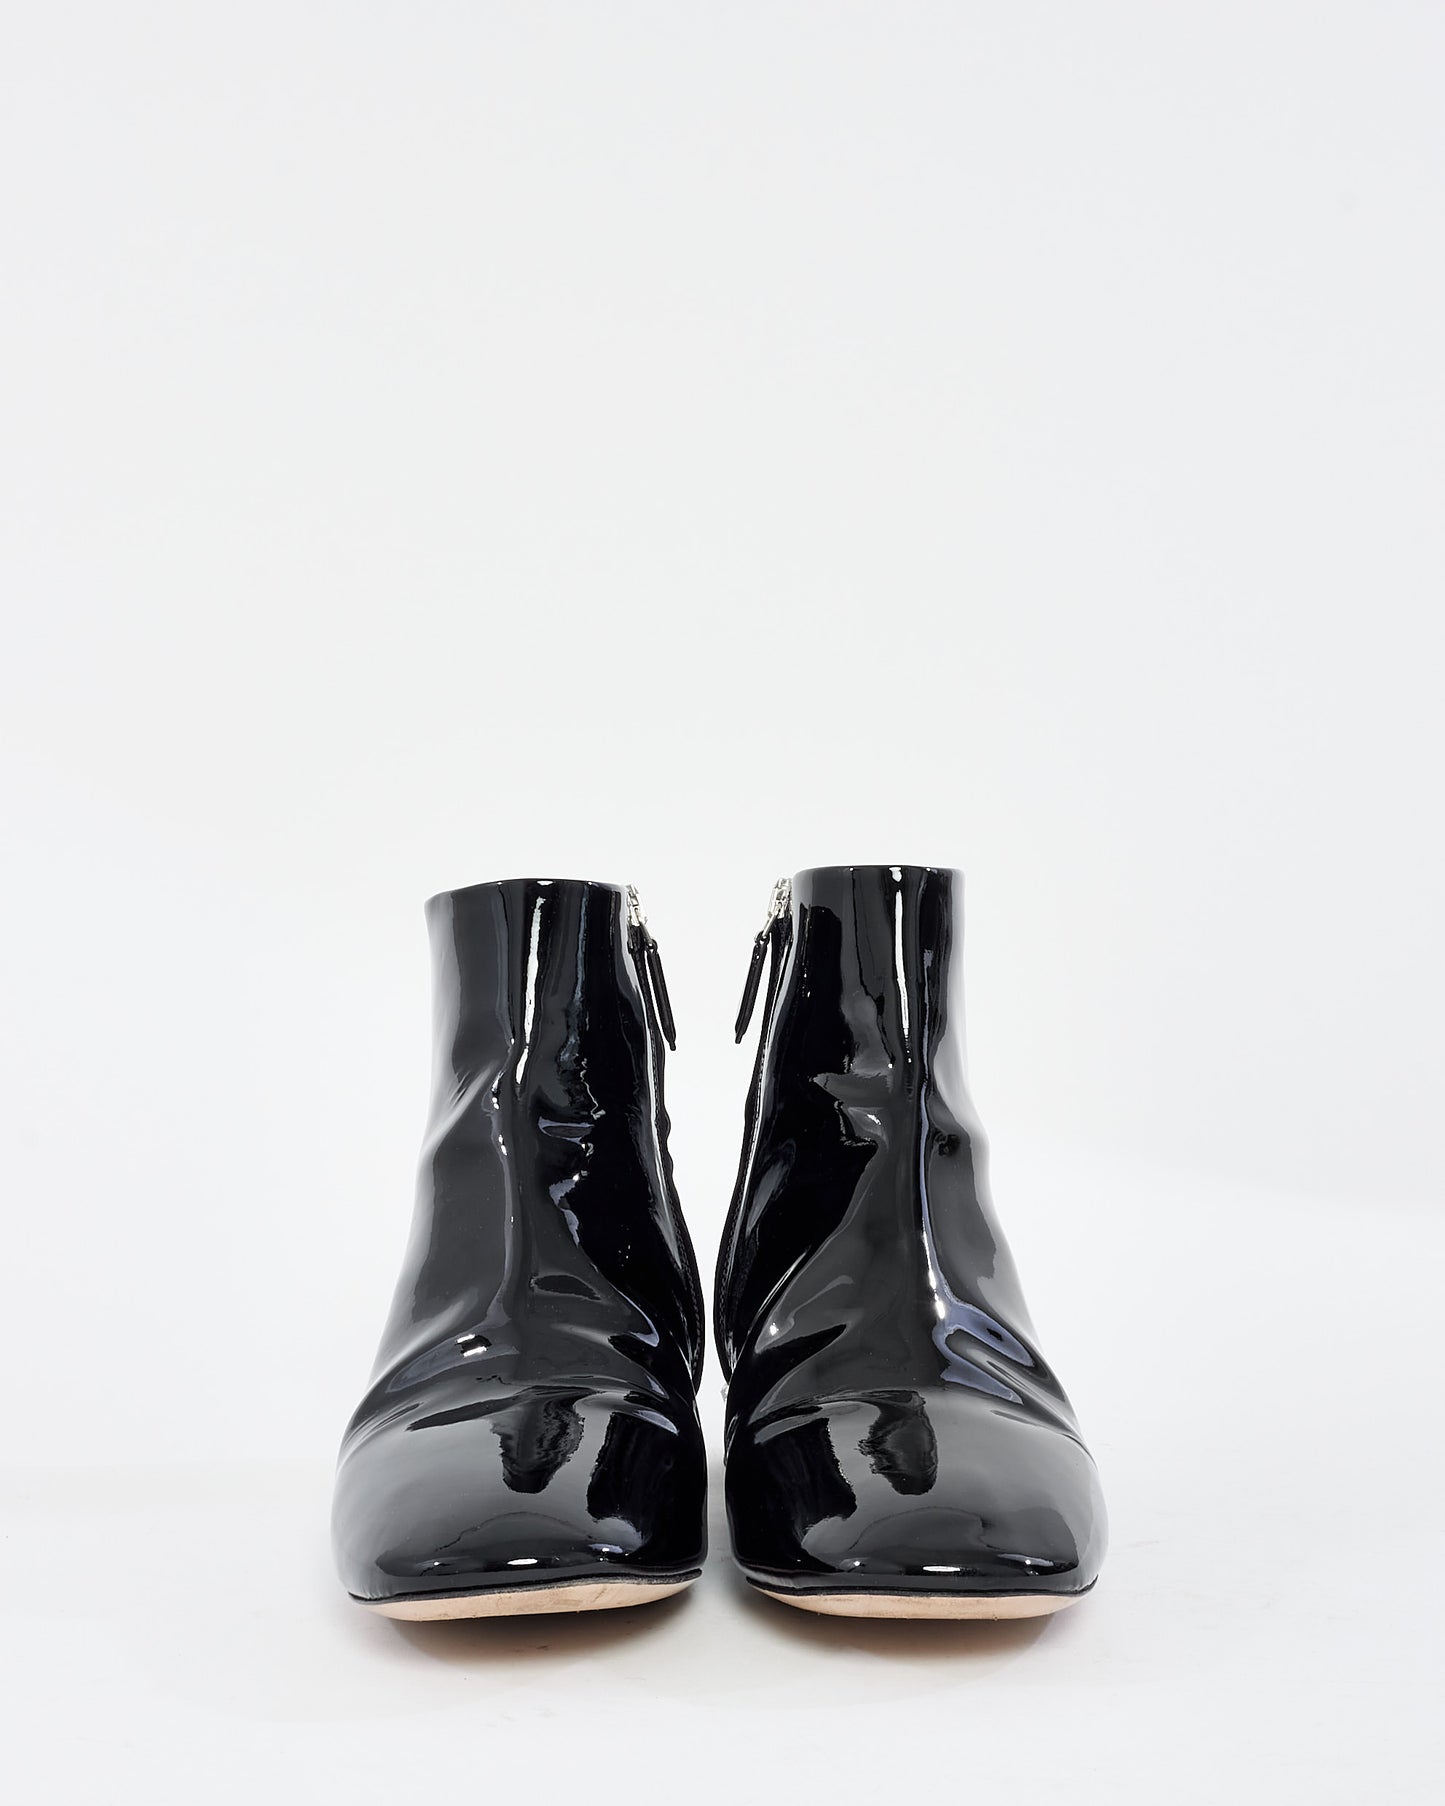 Miu Miu Black Patent Leather Ankle Boot with Jewel Heel - 39